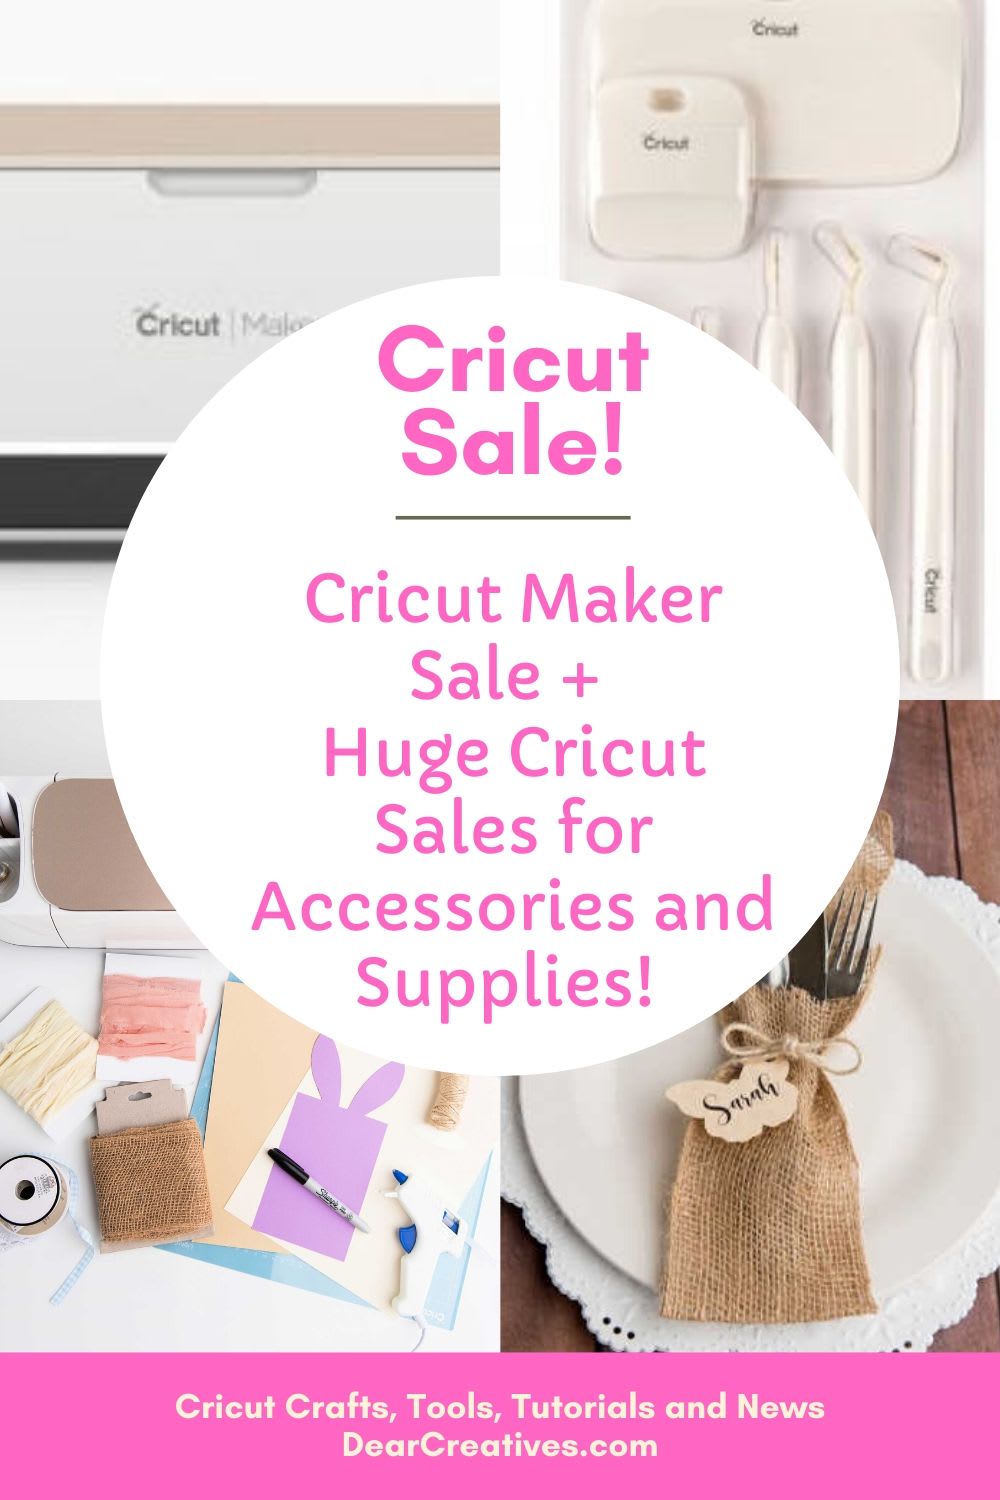 Cricut Maker Sale! + Cricut Sale Materials And Accessories